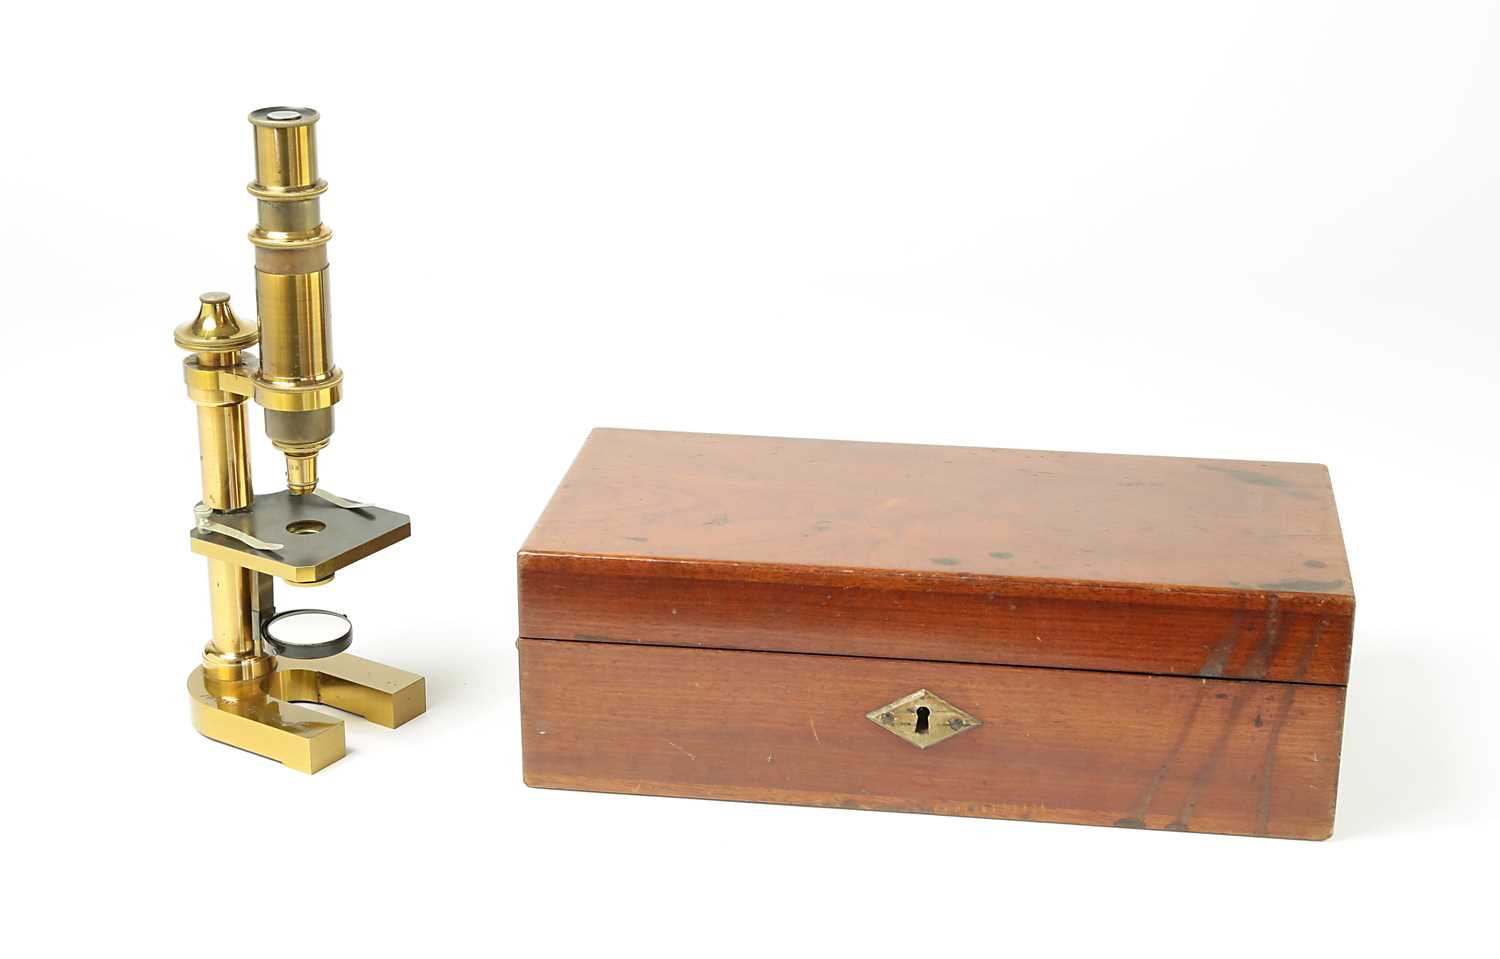 Lot 115 - Brass Monocular Microscope by Carl Zeiss, c. 1886.